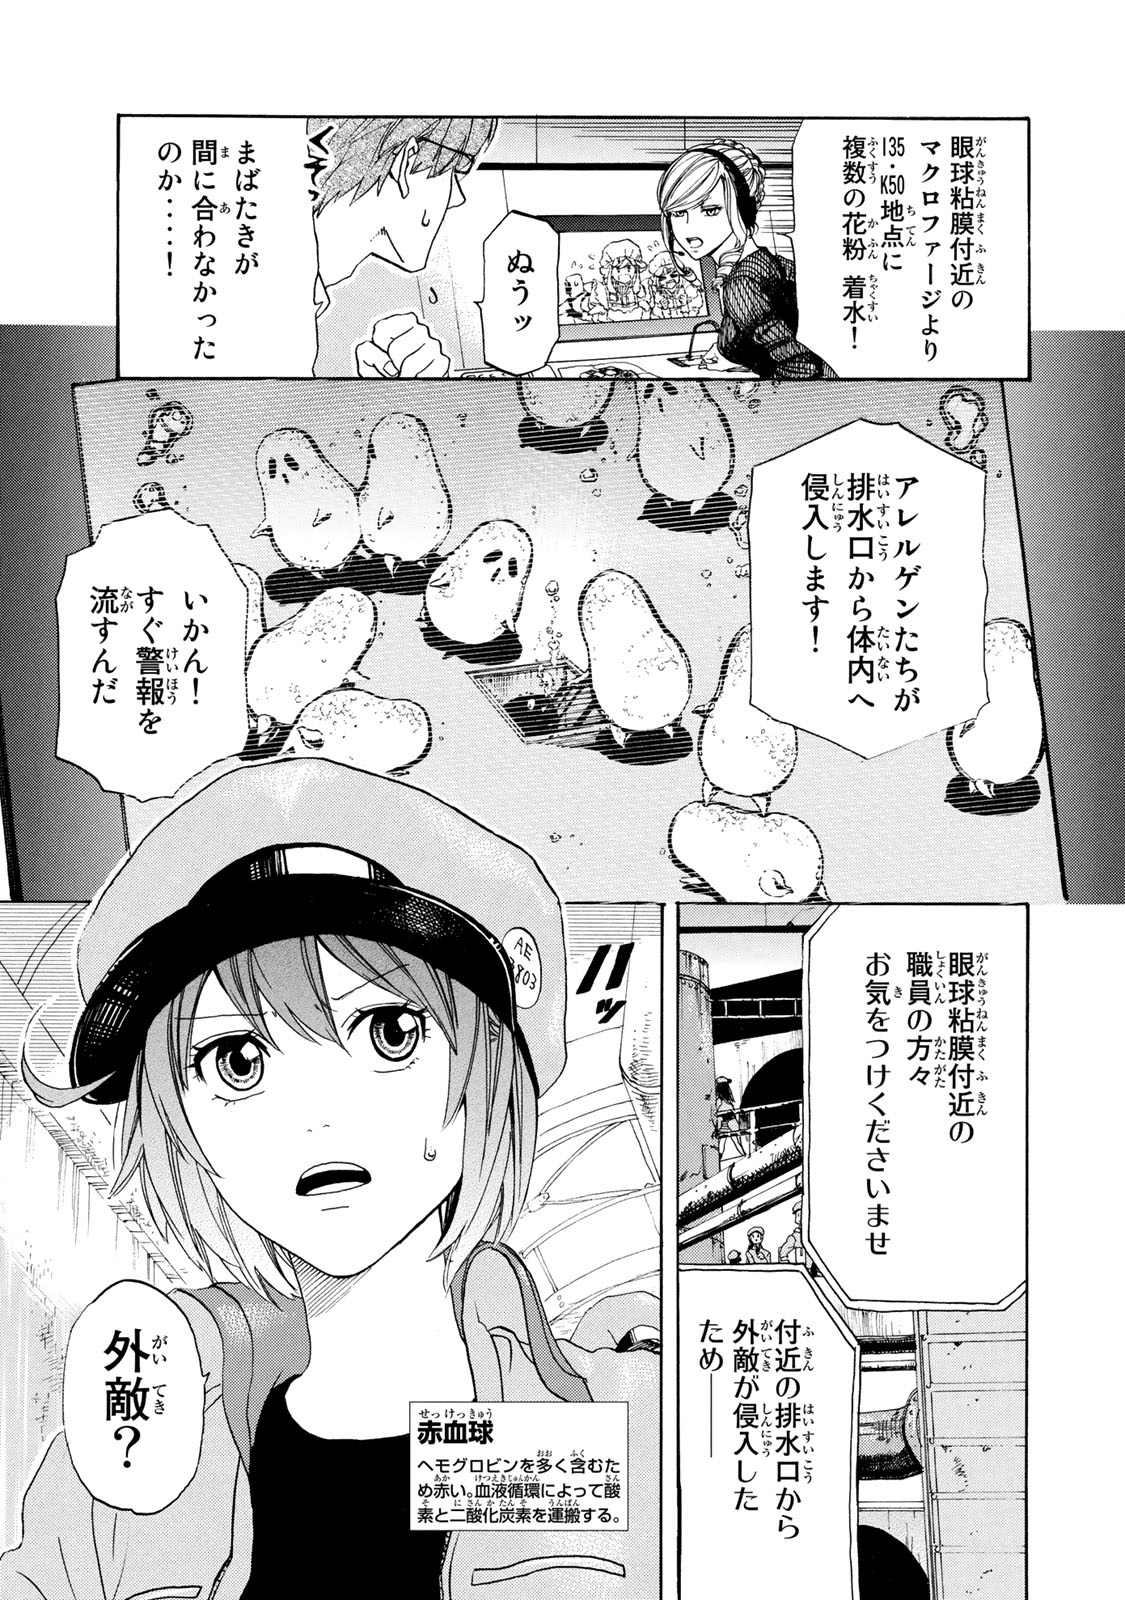 Hataraku Saibou - Chapter 2 - Page 5